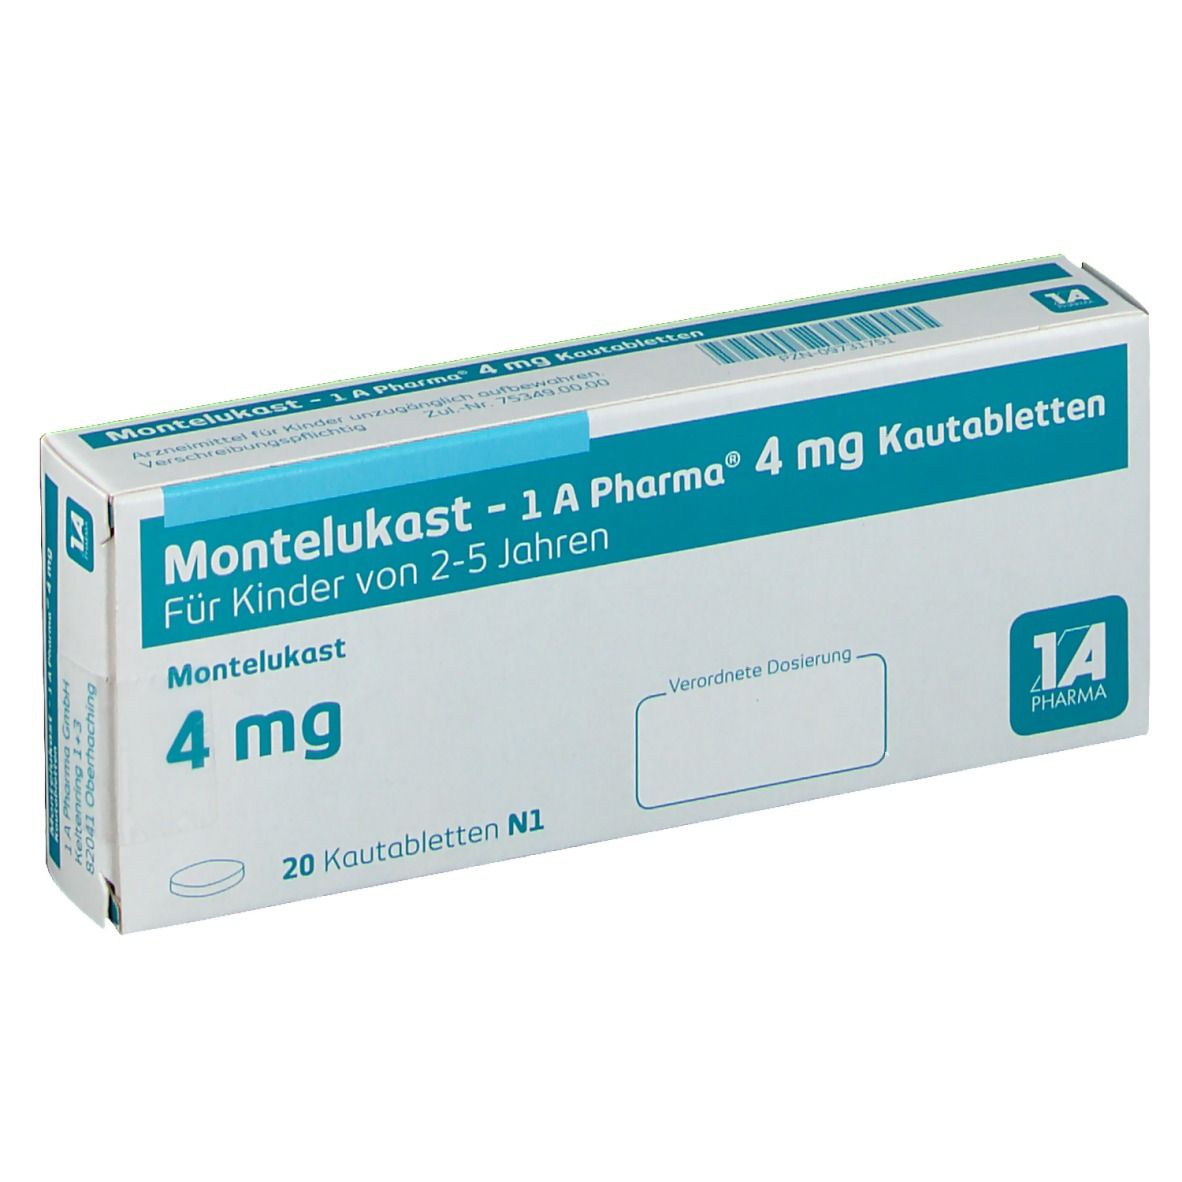 Montelukast - 1 A Pharma® 4 mg